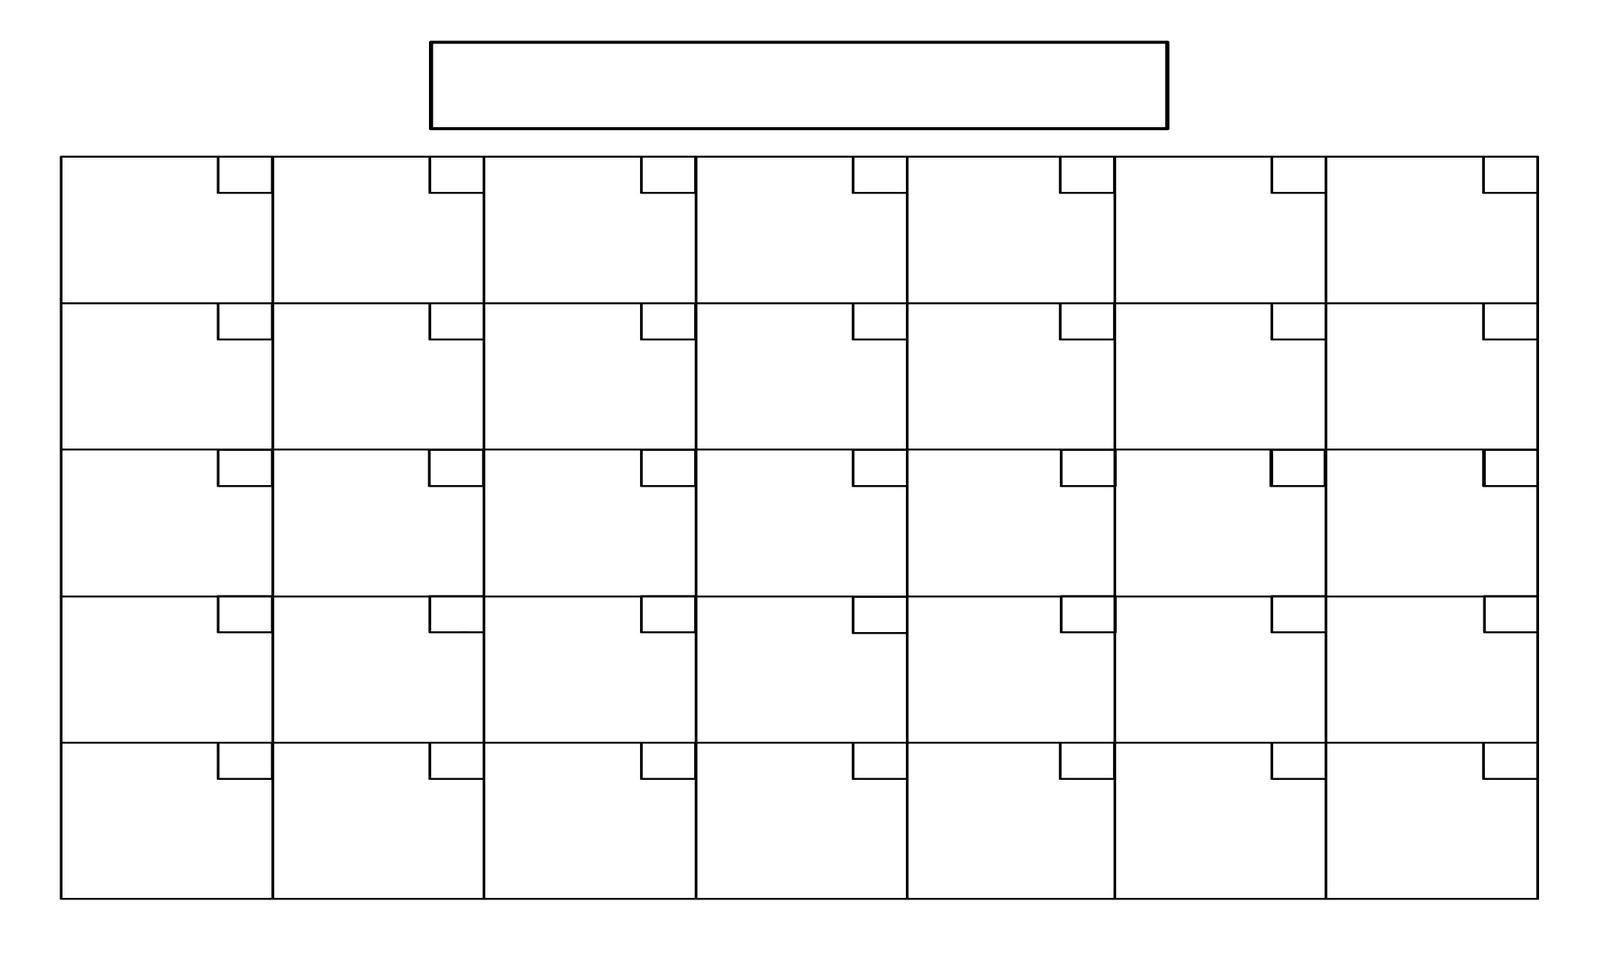 16 Simple Blank Calendar Template Images - Full Size Blank Printable within Printable Full Size Blank Calendar